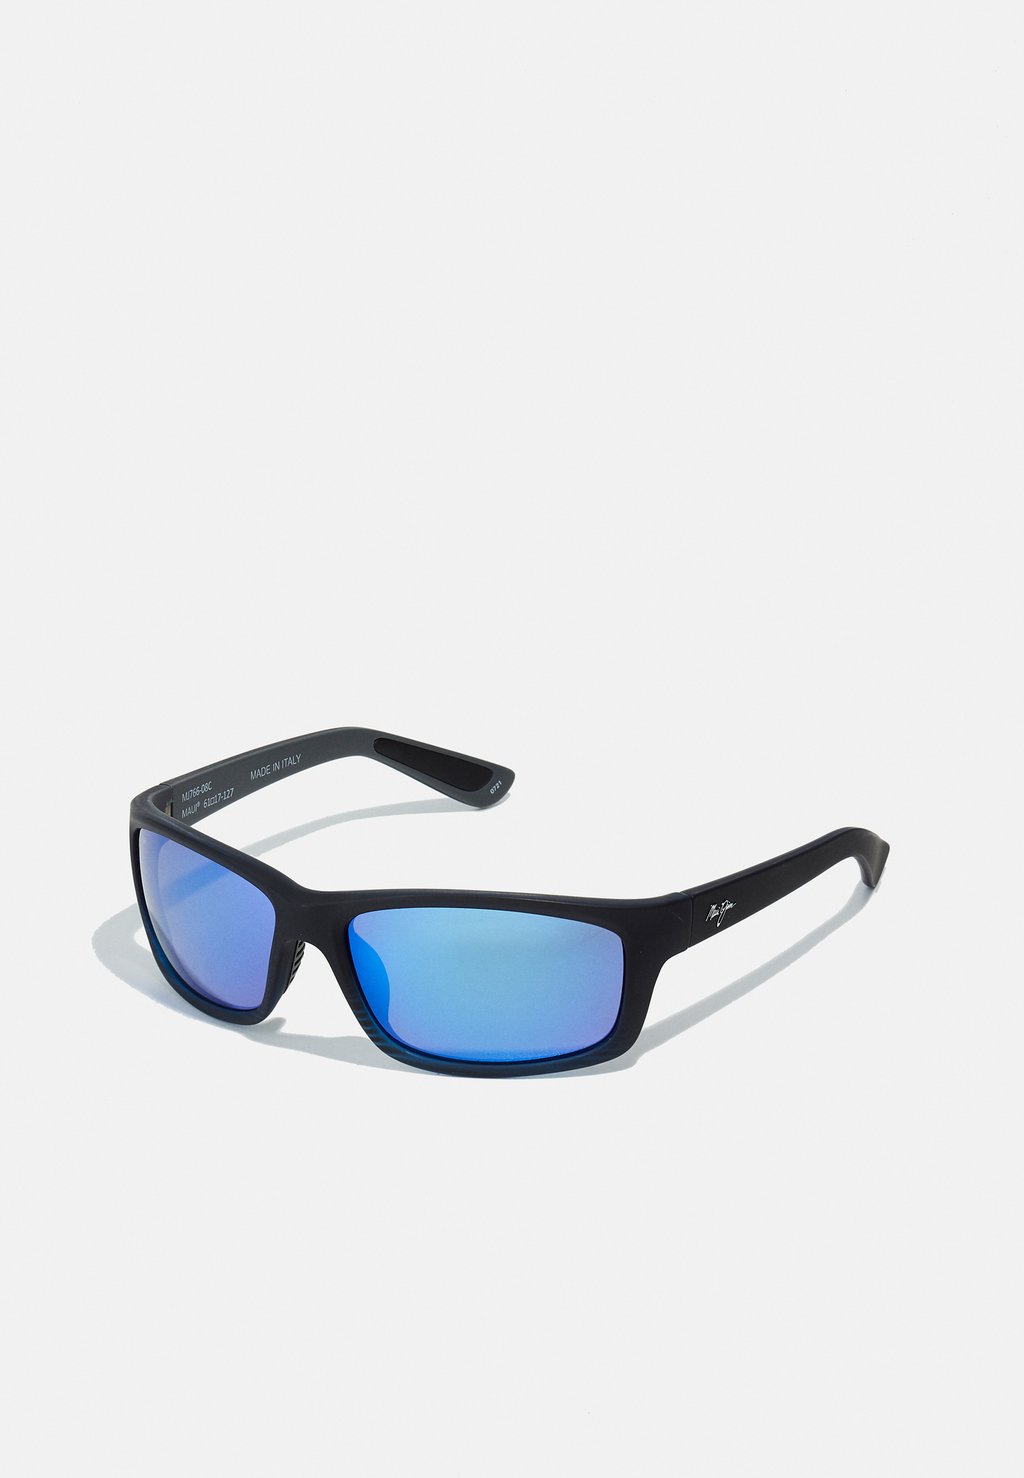 Солнцезащитные очки KANAIO COAST Maui Jim, цвет matte blue солнцезащитные очки kanaio coast maui jim цвет matte soft black white blue